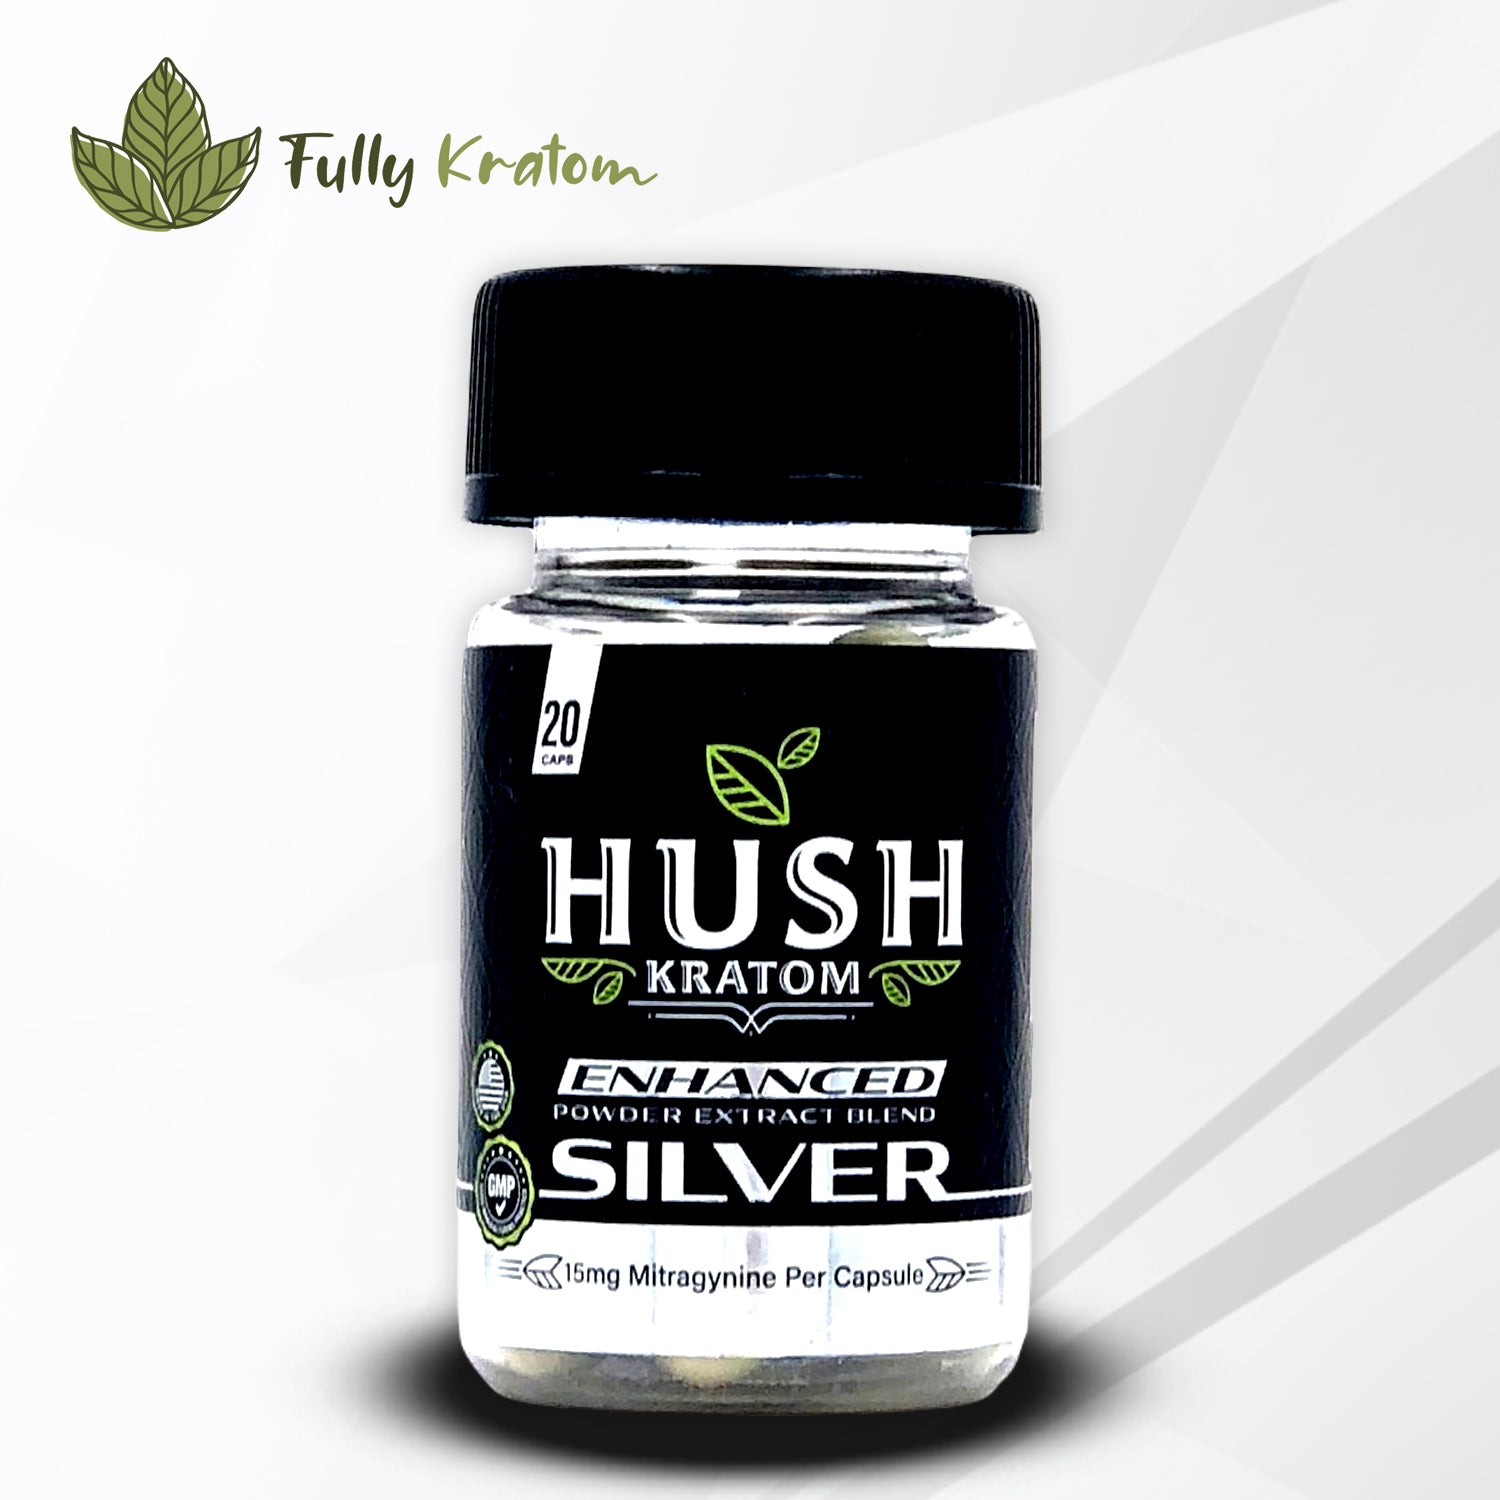 Hush Silver Enhanced Kratom Extract Capsules - 20 Caps